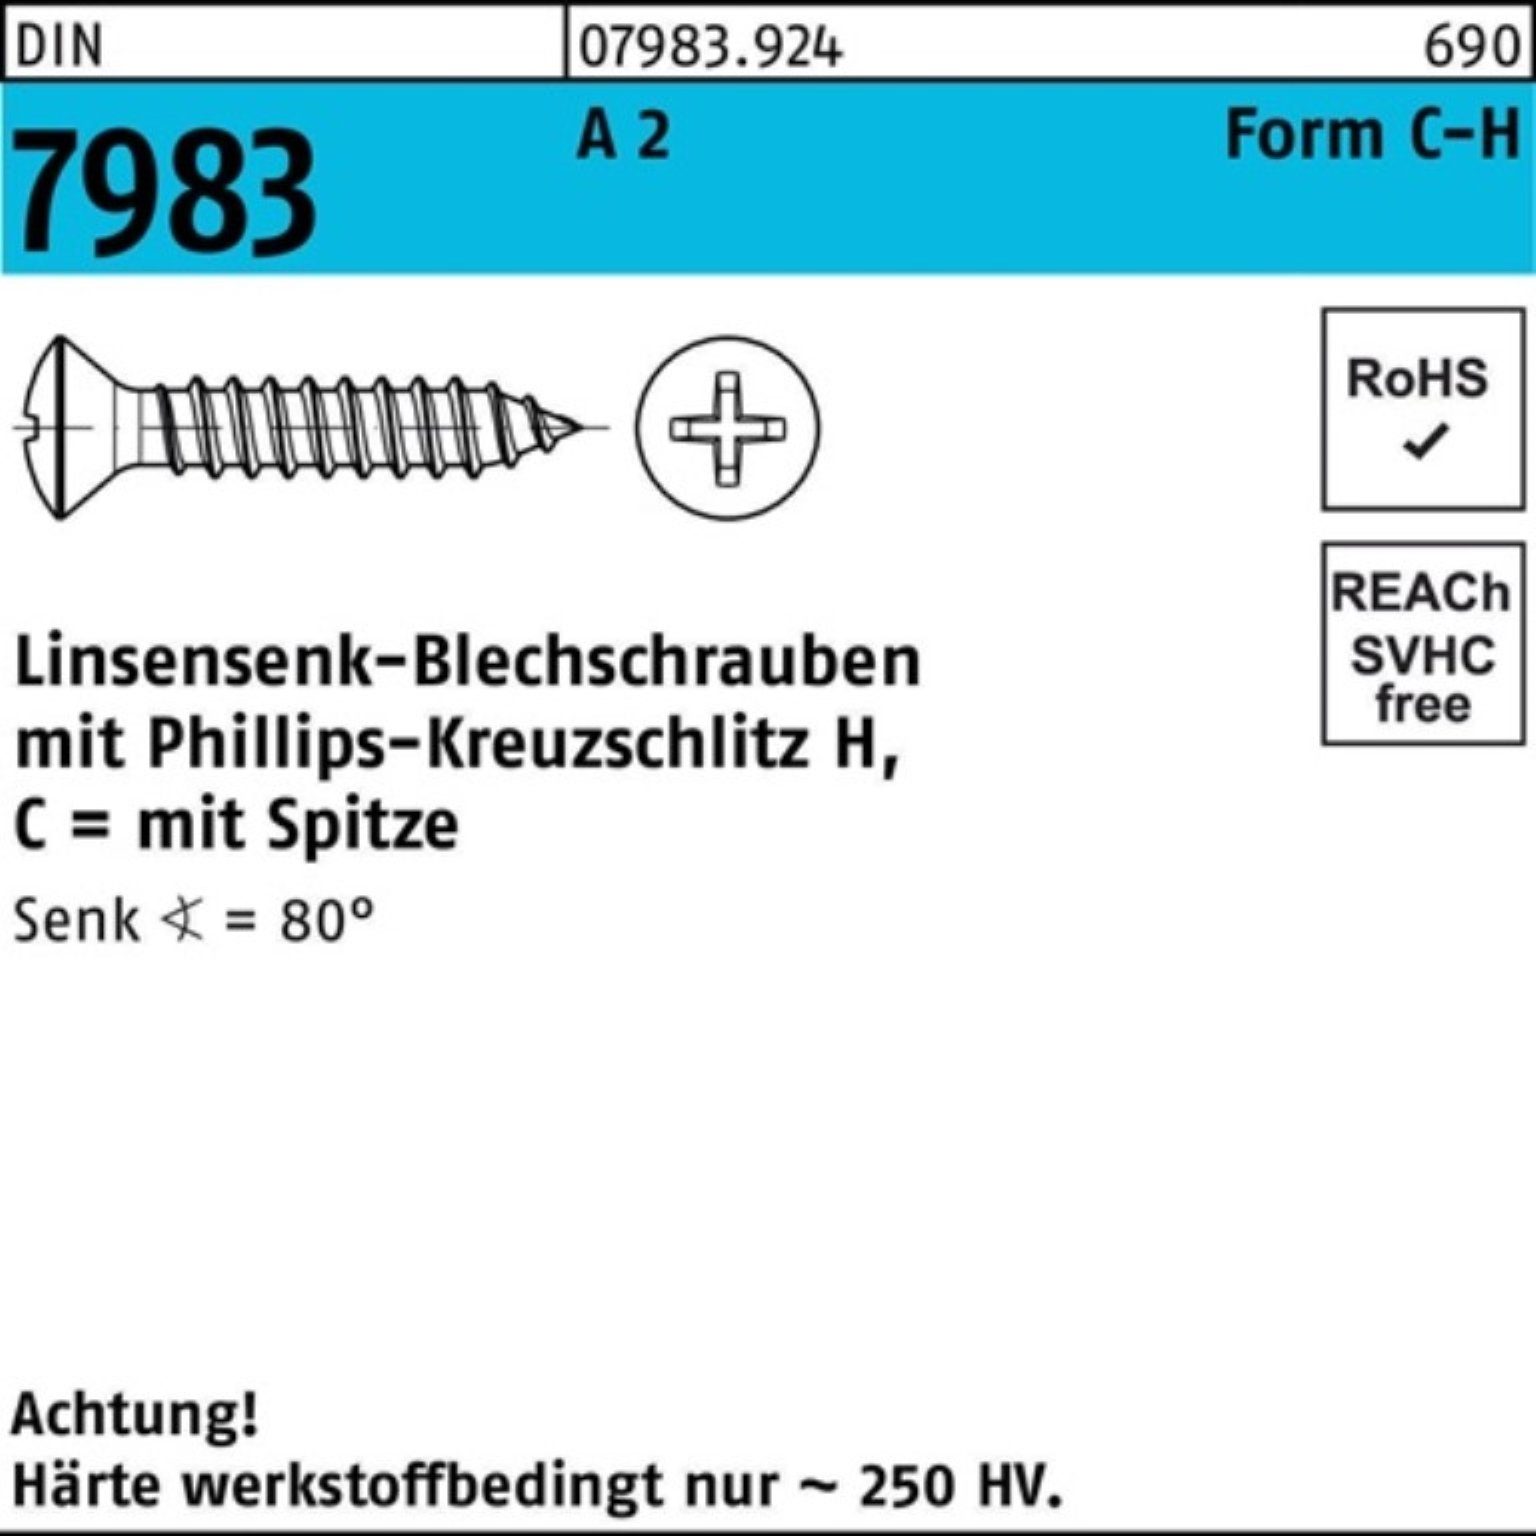 Pack Reyher Schraube Linsensenkblechschraube S 1000er PH 2 7983 DIN 3,5x 1000 32-H C A